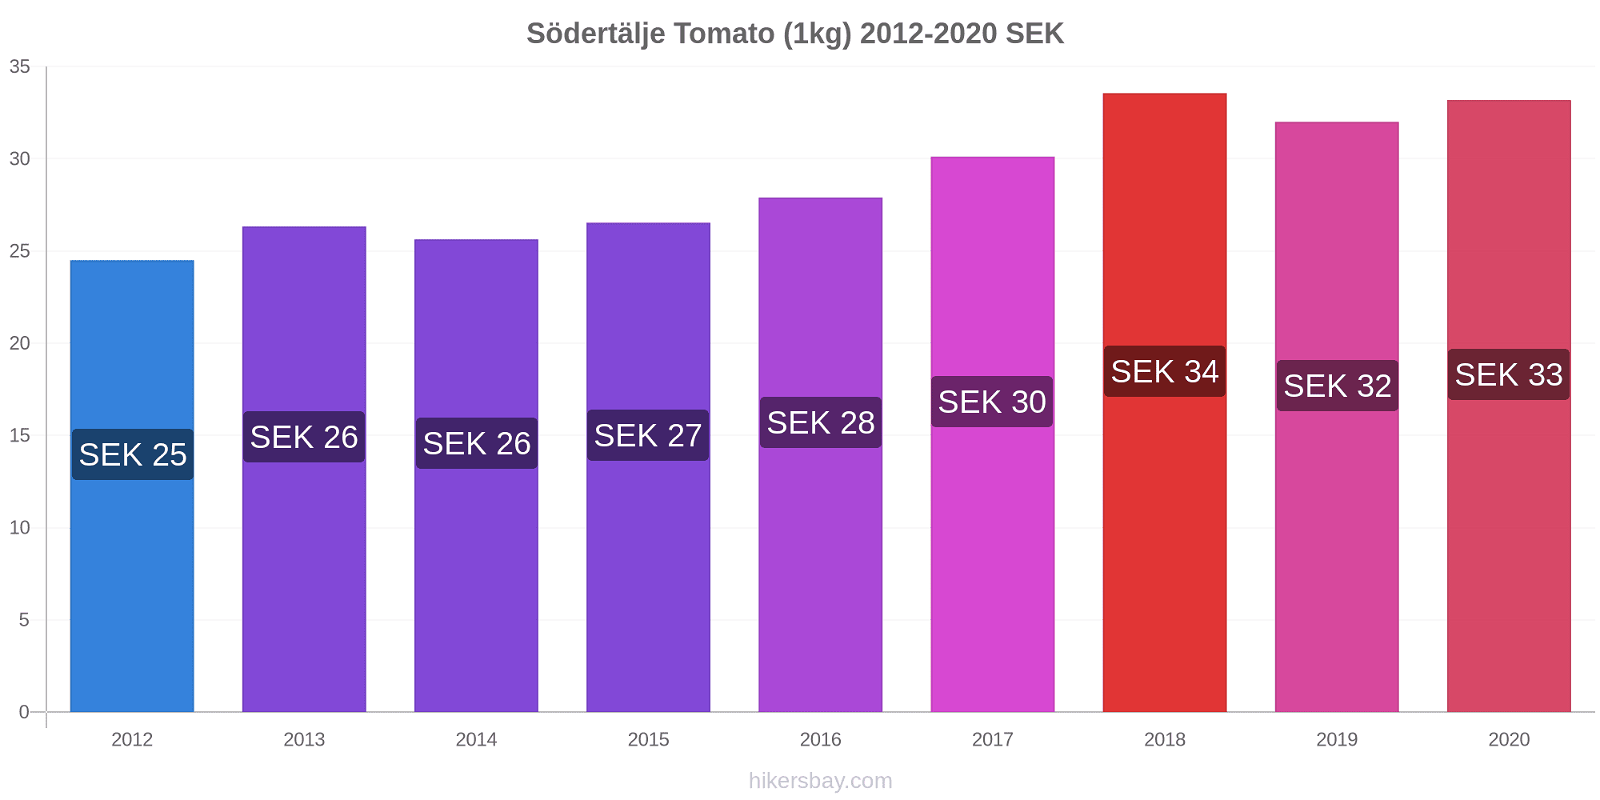 Södertälje price changes Tomato (1kg) hikersbay.com